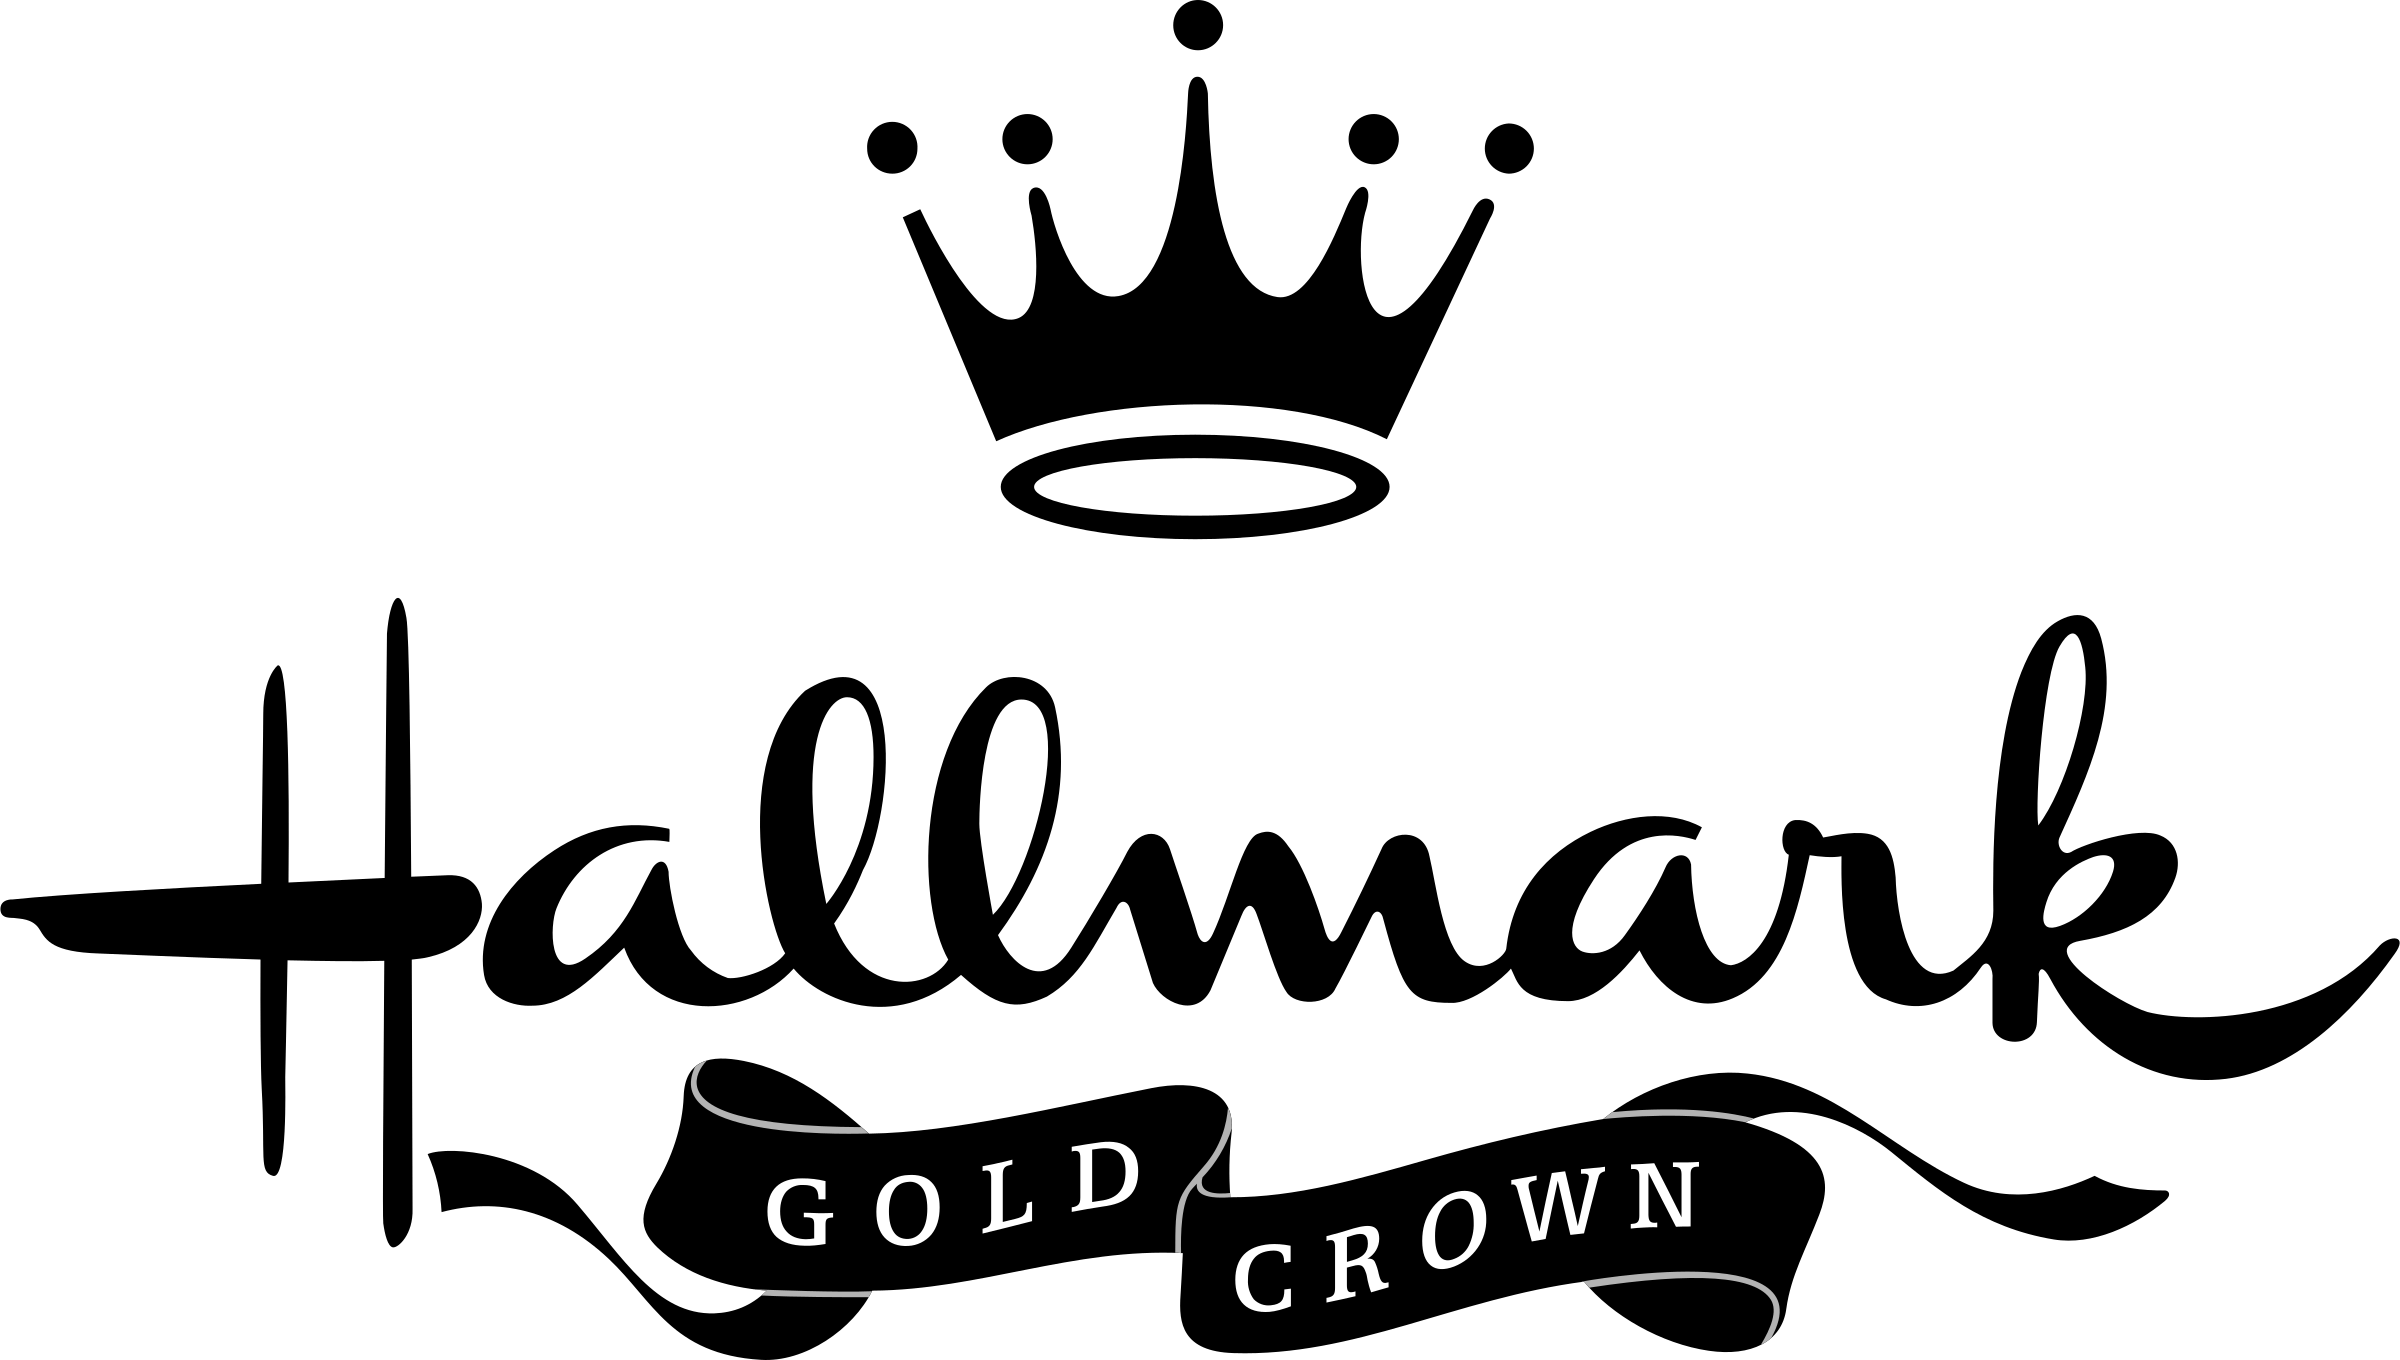 Black and Gold Crown Logo - Hallmark Gold Crown Logo PNG Transparent & SVG Vector - Freebie Supply